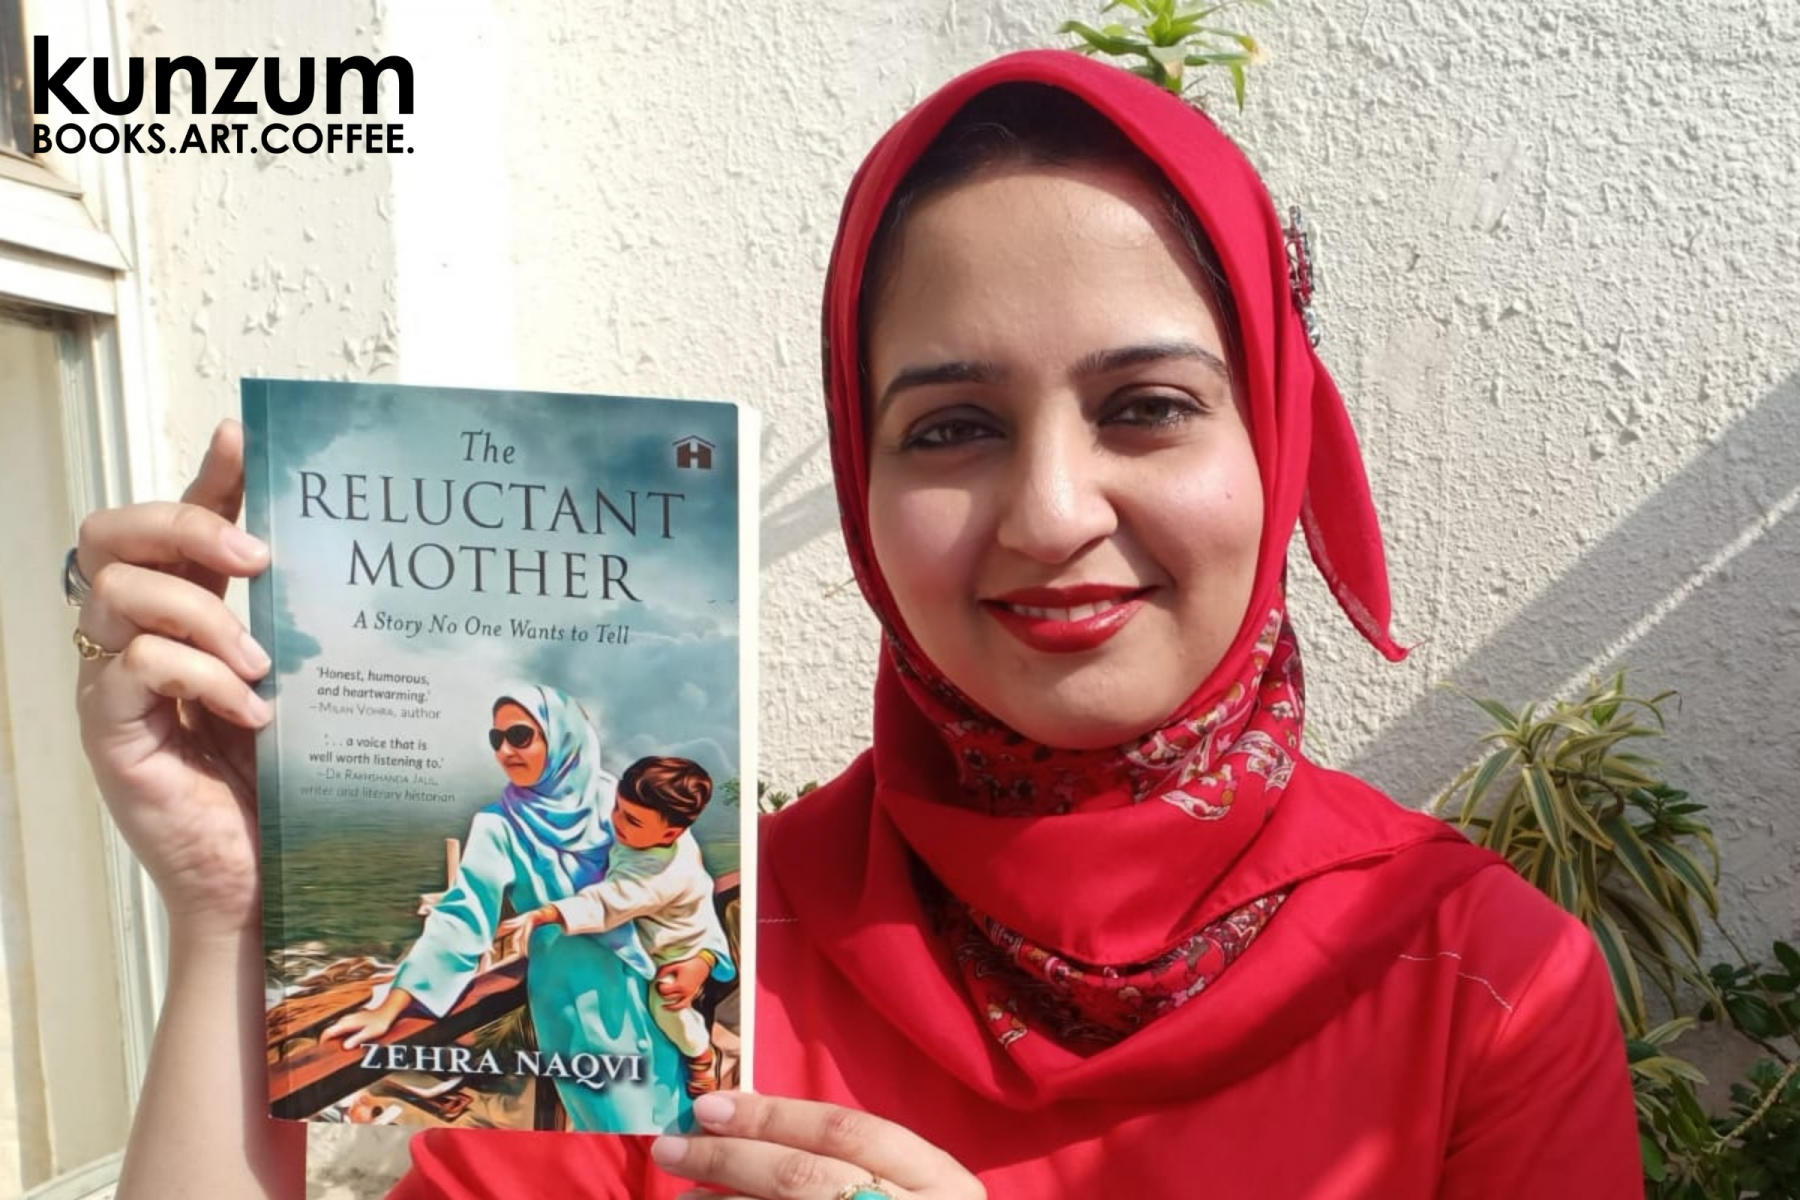 The Reluctant Mother by Zehra Naqvi: Book Discussion, Kunzum – Gurgaon, April 24